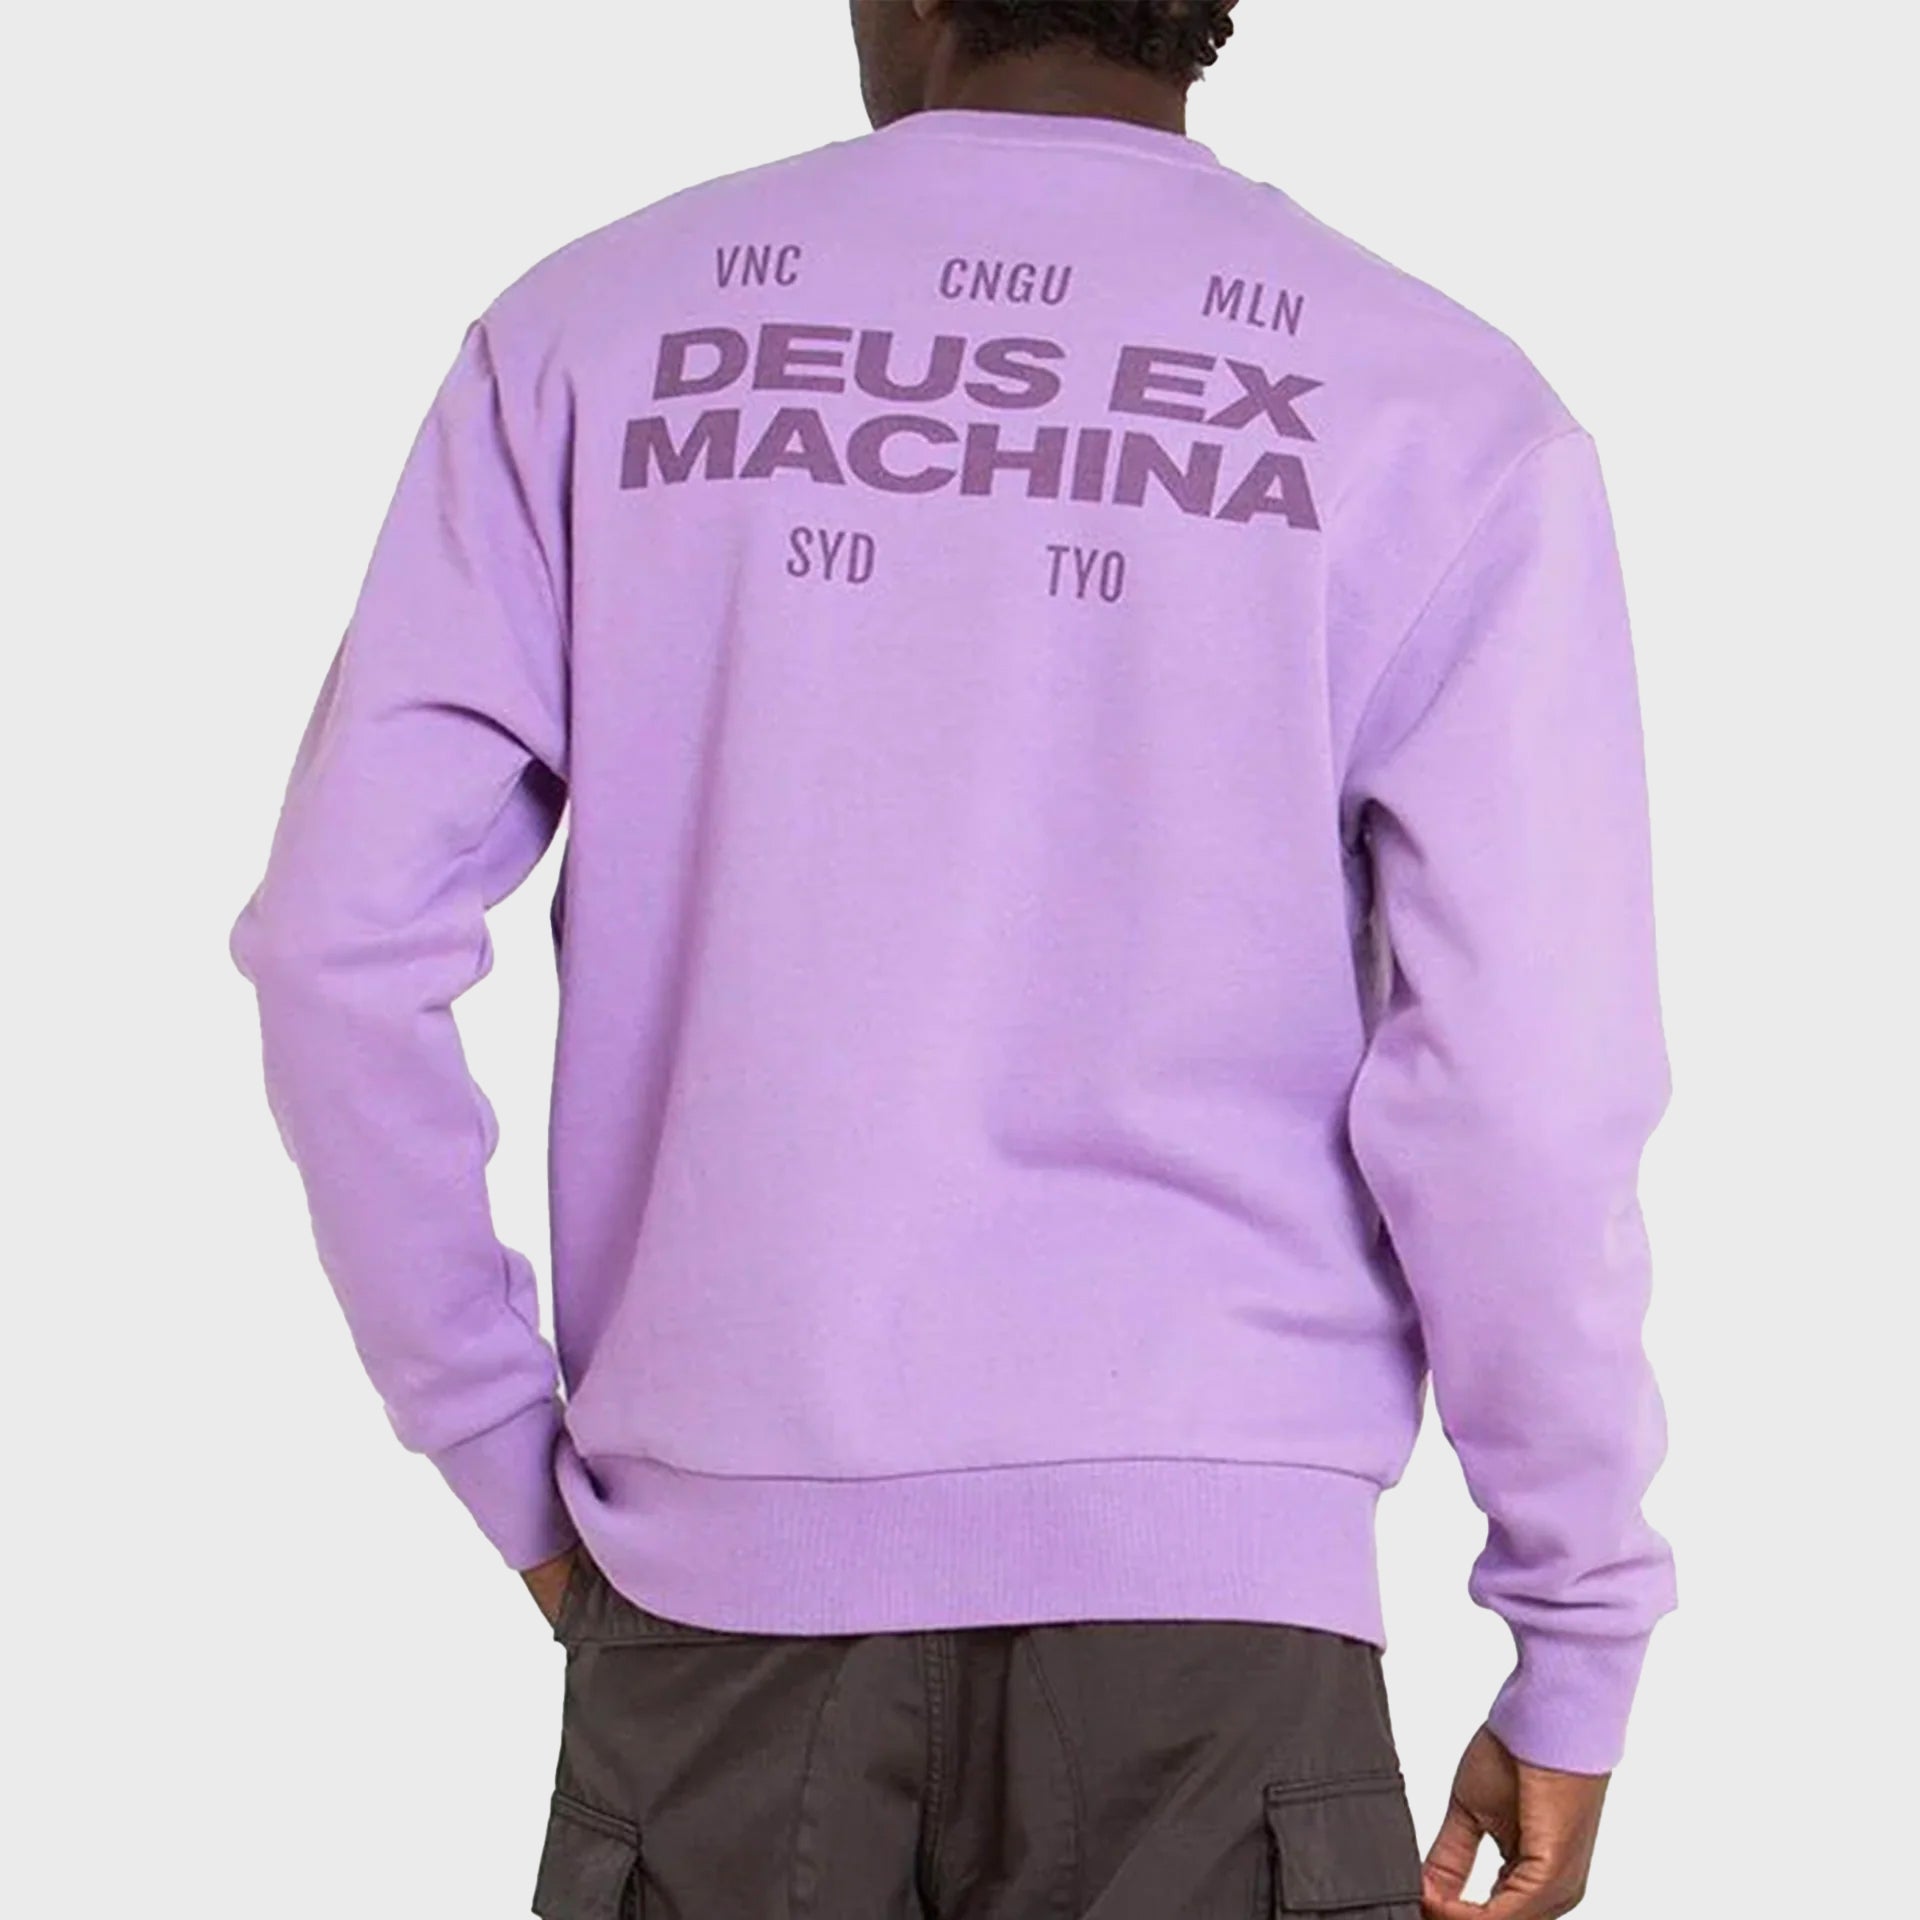 Deus Big Time - Mens Sweatshirt - Viola - ManGo Surfing